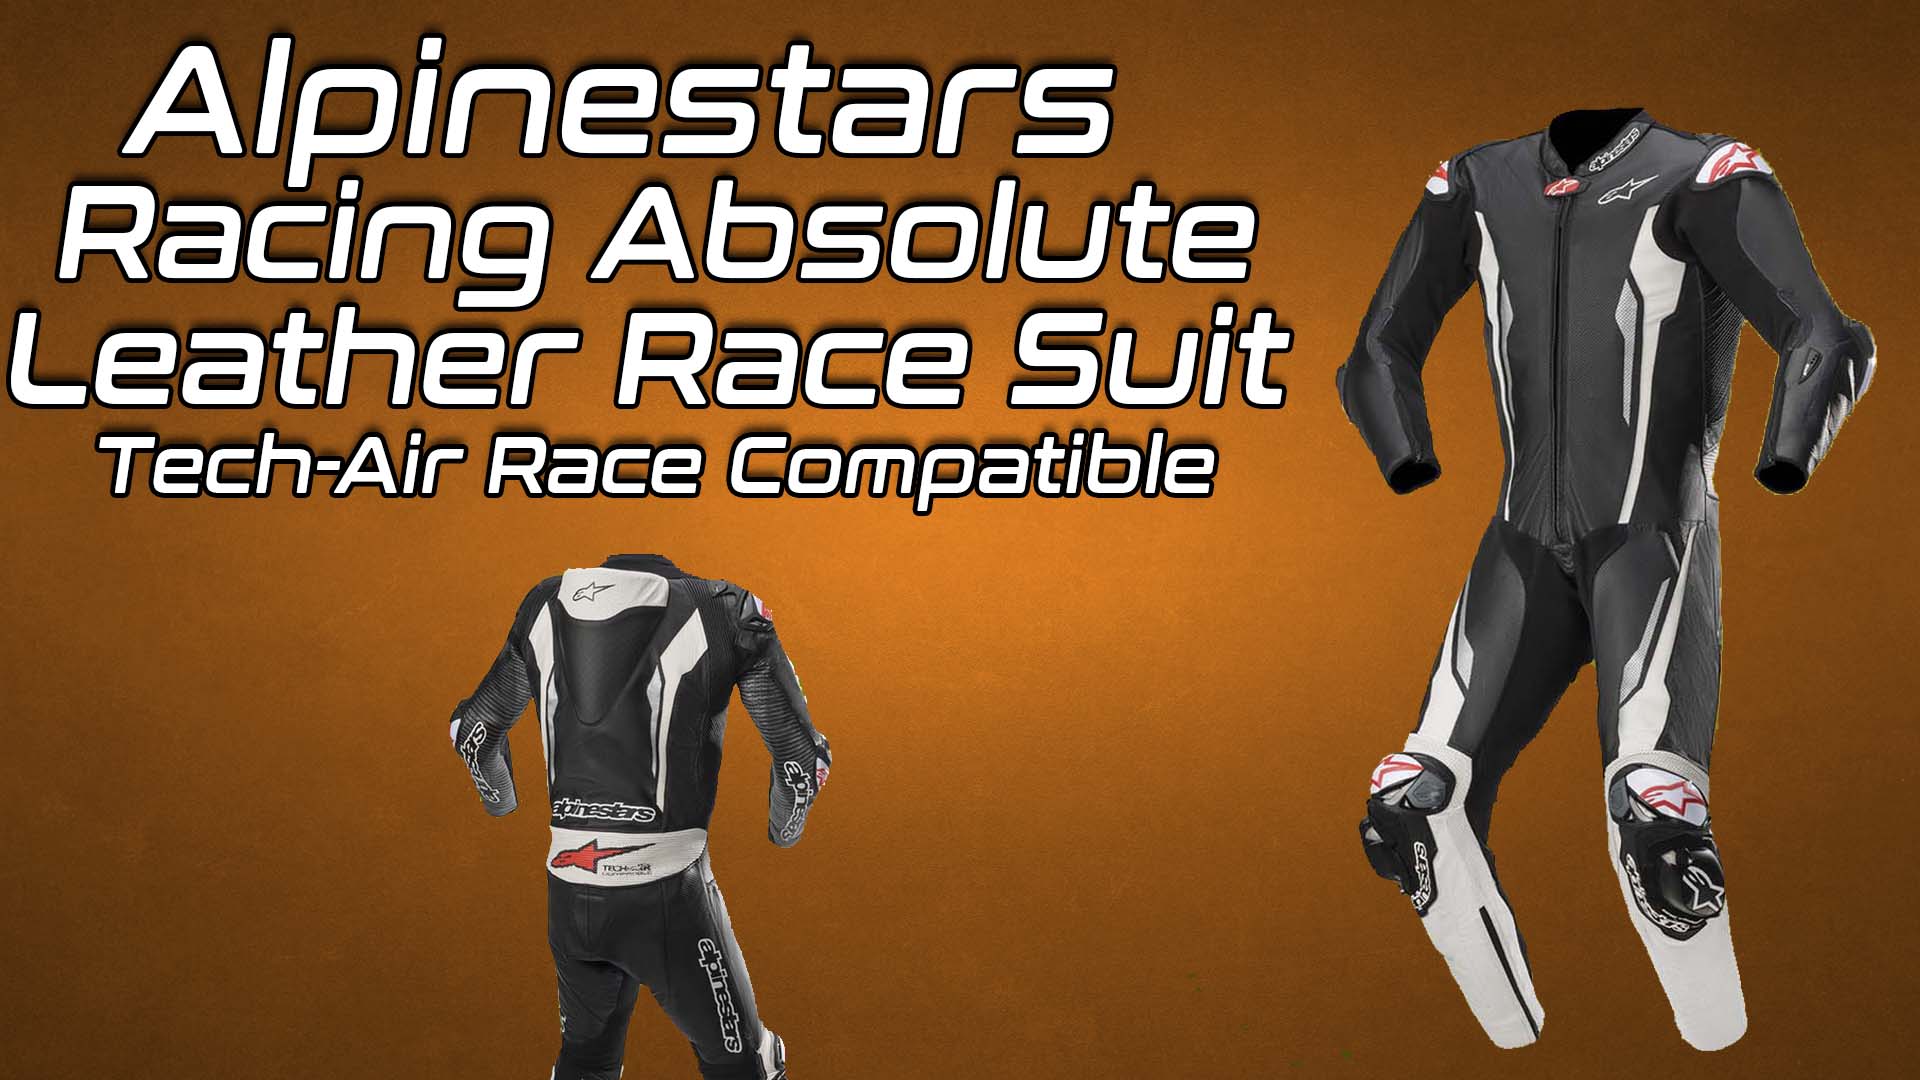 Alpinestars Racing Absolute Leather Race Suit Tech-Air Race Compatible